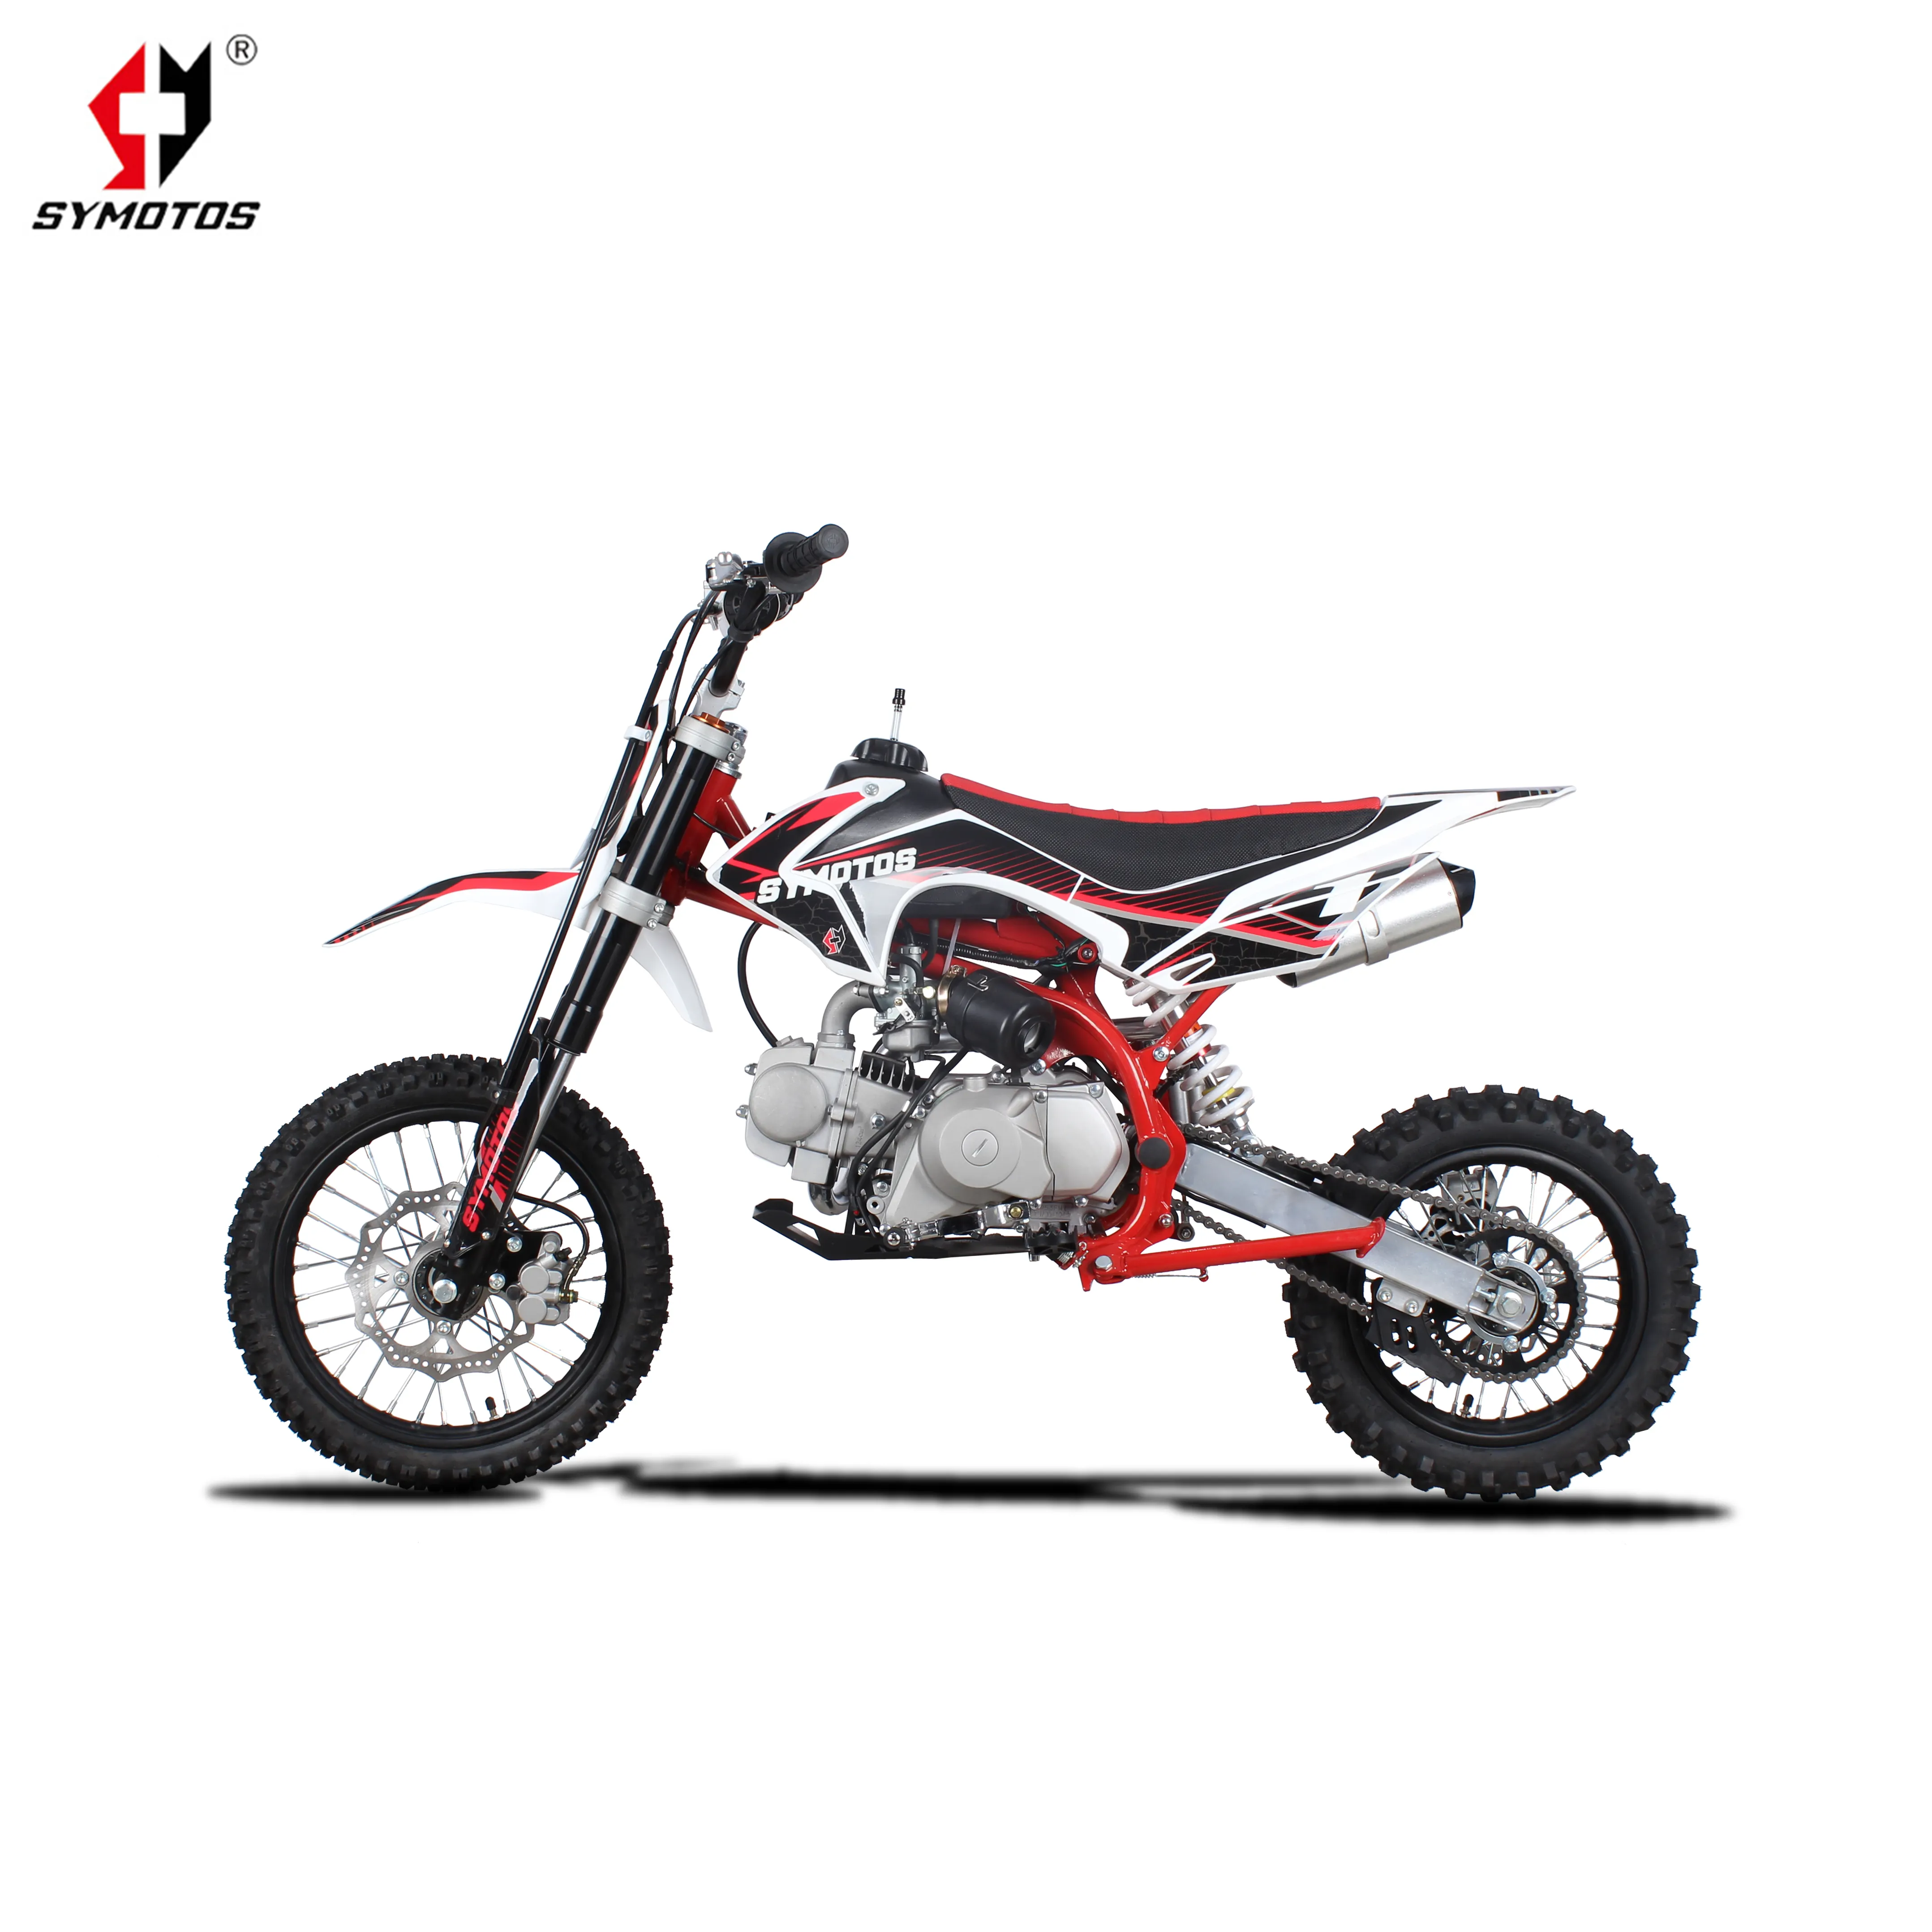 Symotos C2S 14/12 pitbike dirt bike adolescents moto 140cc 4stoke yx 125cc pit bike